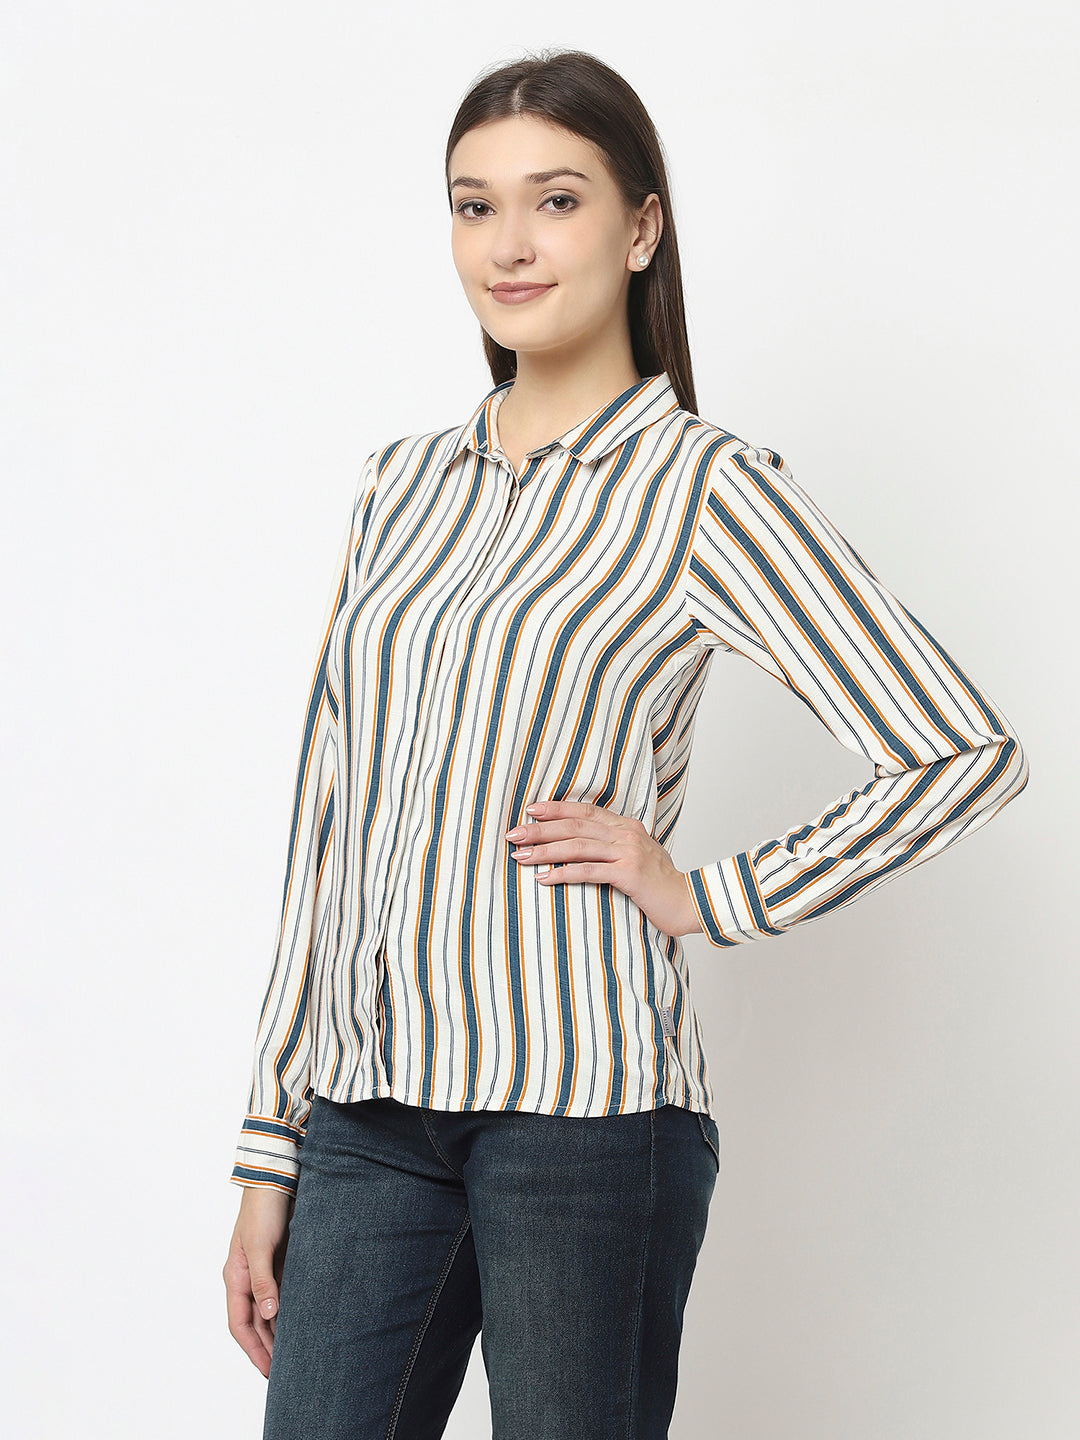 White Shirt with Dual-Tone Stripes